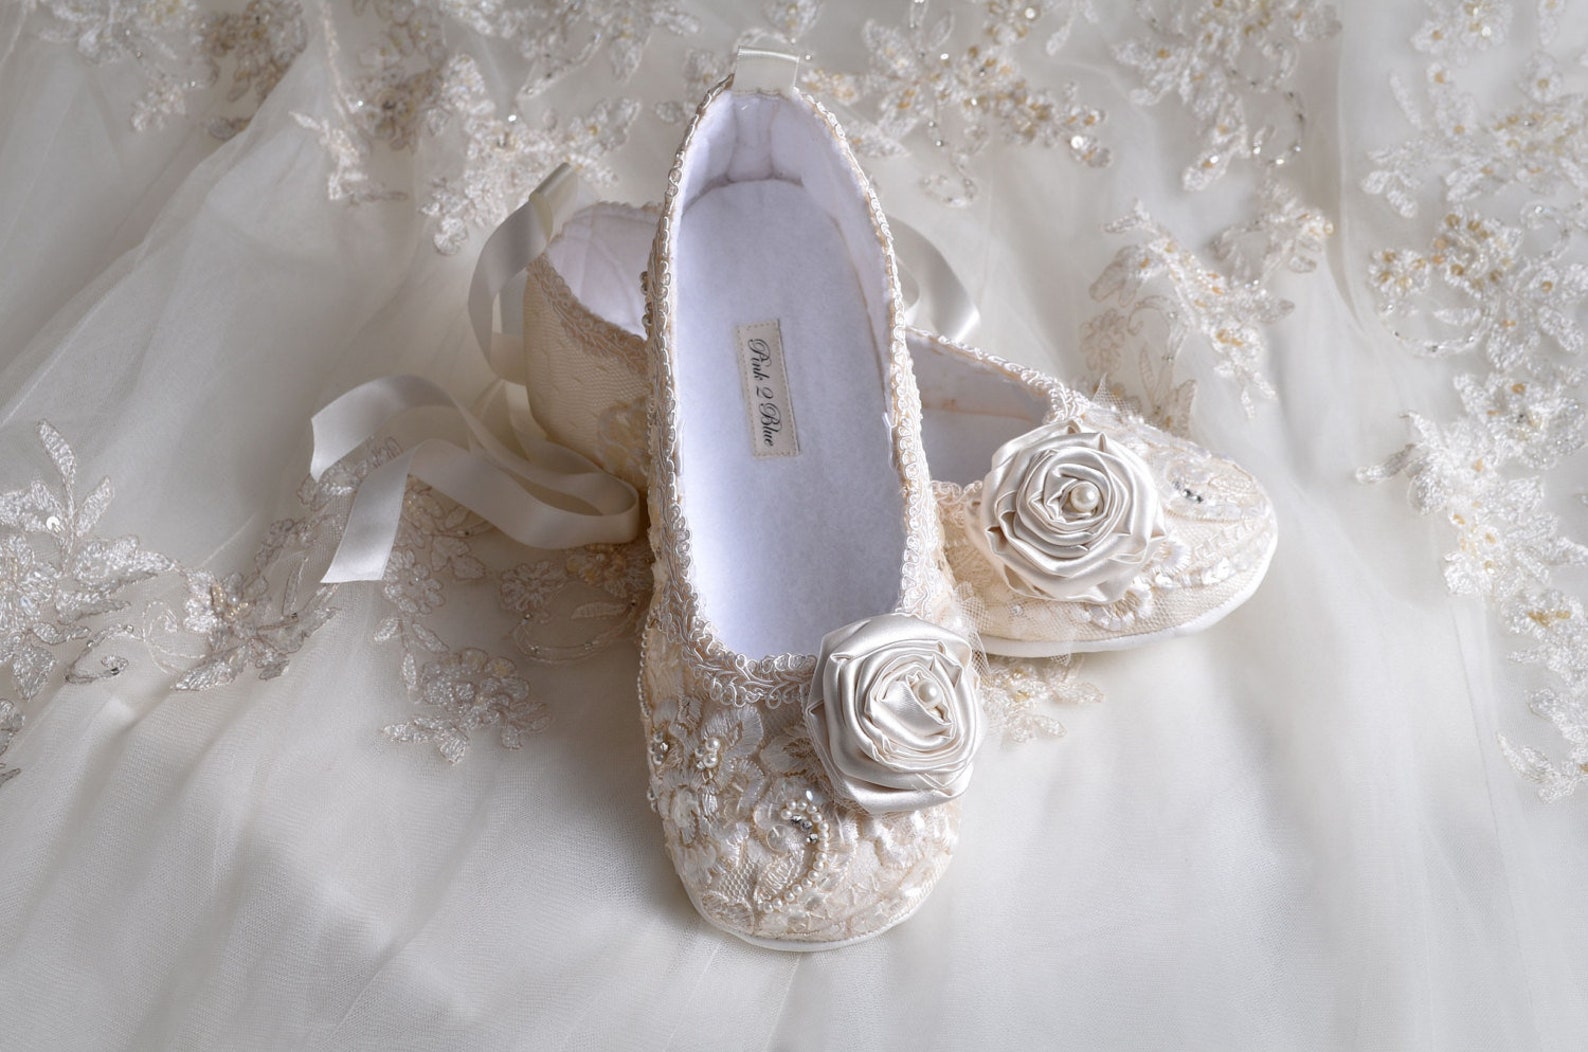 lace ballet wedding shoes, handmade wedding flats, wedding bridal ballet shoes,wedding slippers,shoes crystals and pearls, weddi